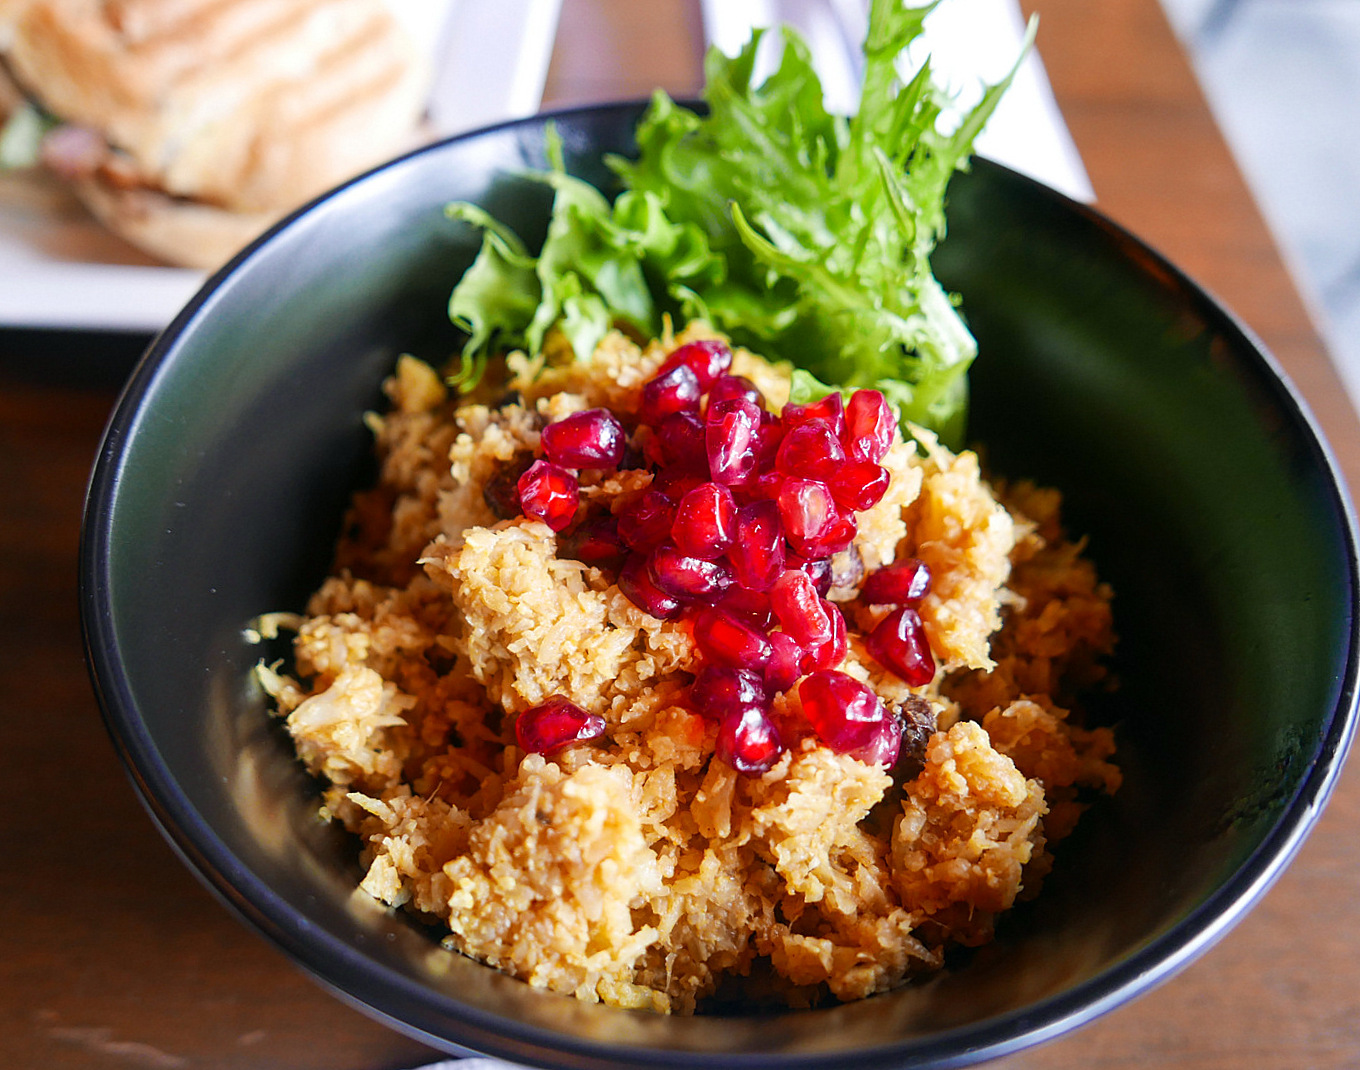 3. The Bean Belt - Sauteed cauliflower rice salad